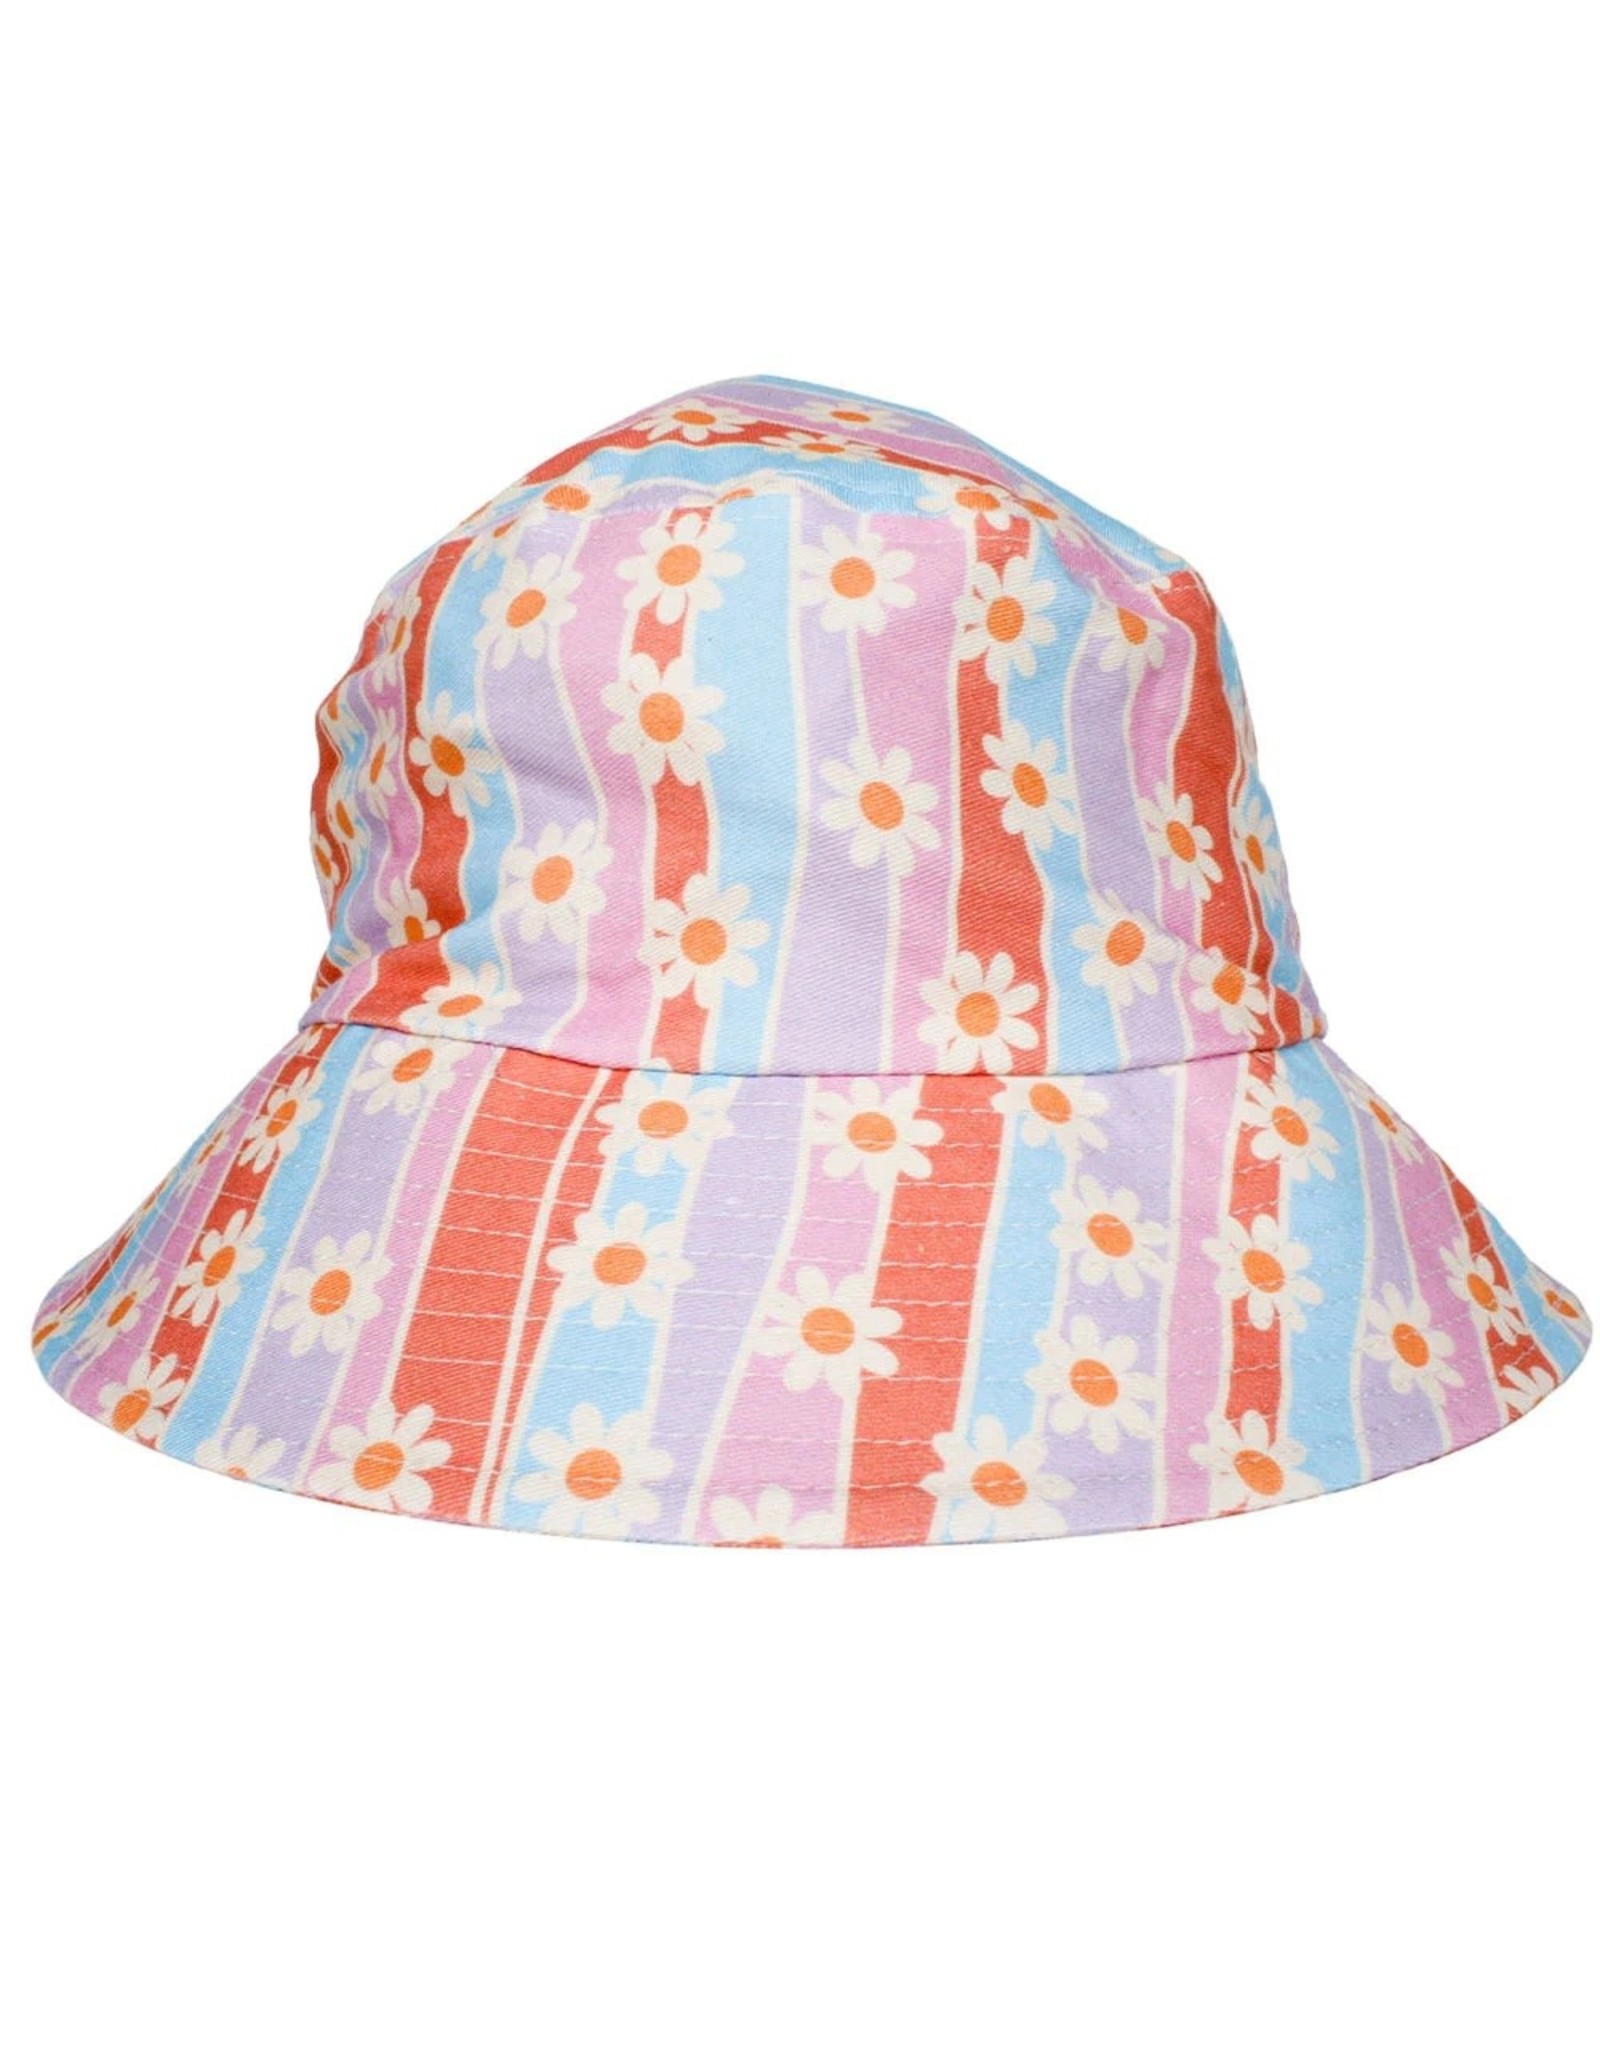 Daisy and Stripes Bucket Hat